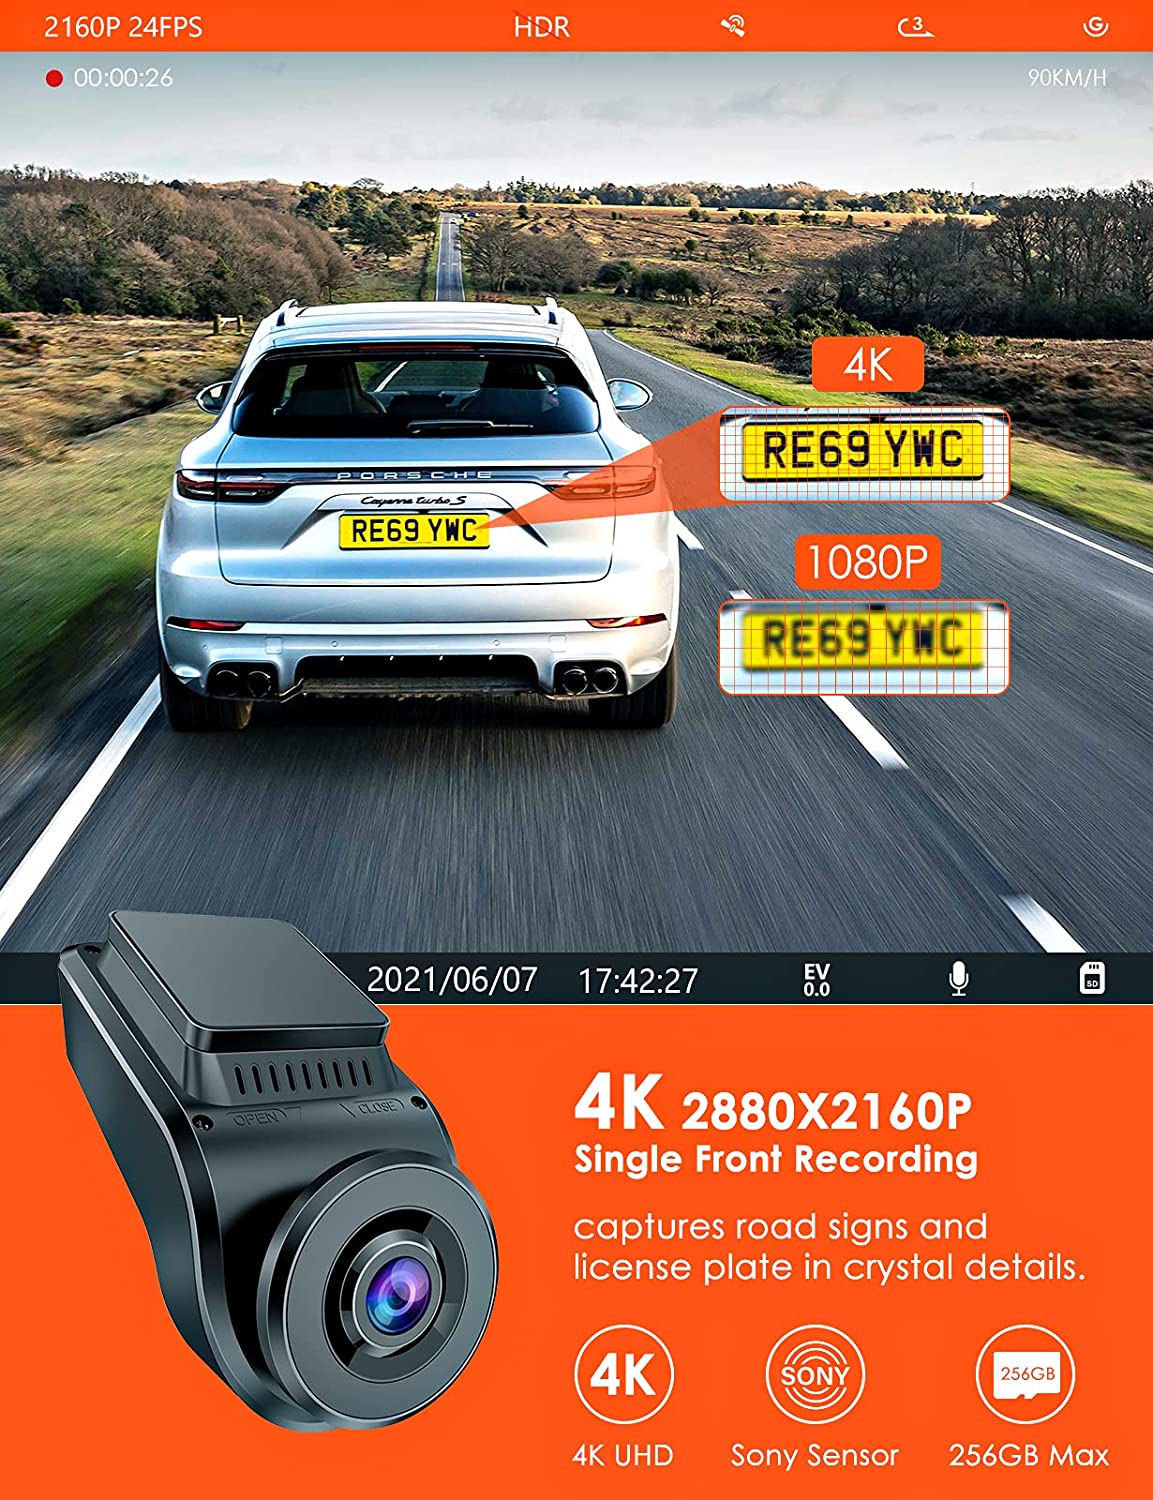 Vantrue S1 4K Dash Cam Built in GPS Speed, Front and Rear Dual 1080P Black